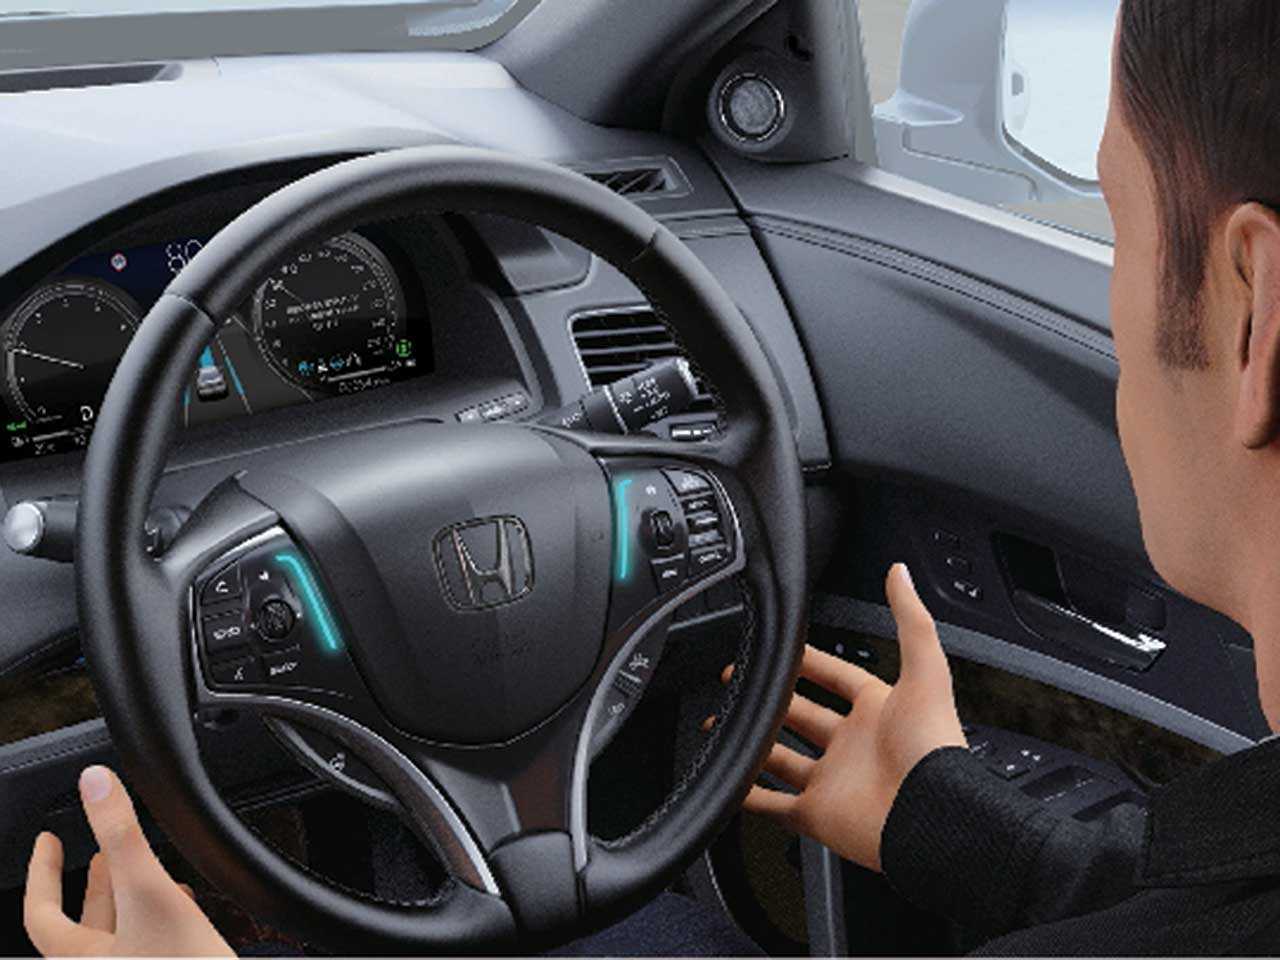 Nvel 3 de autonomia proporcionado pelo sistema Sensing Elite ainda demanda presena do motorista